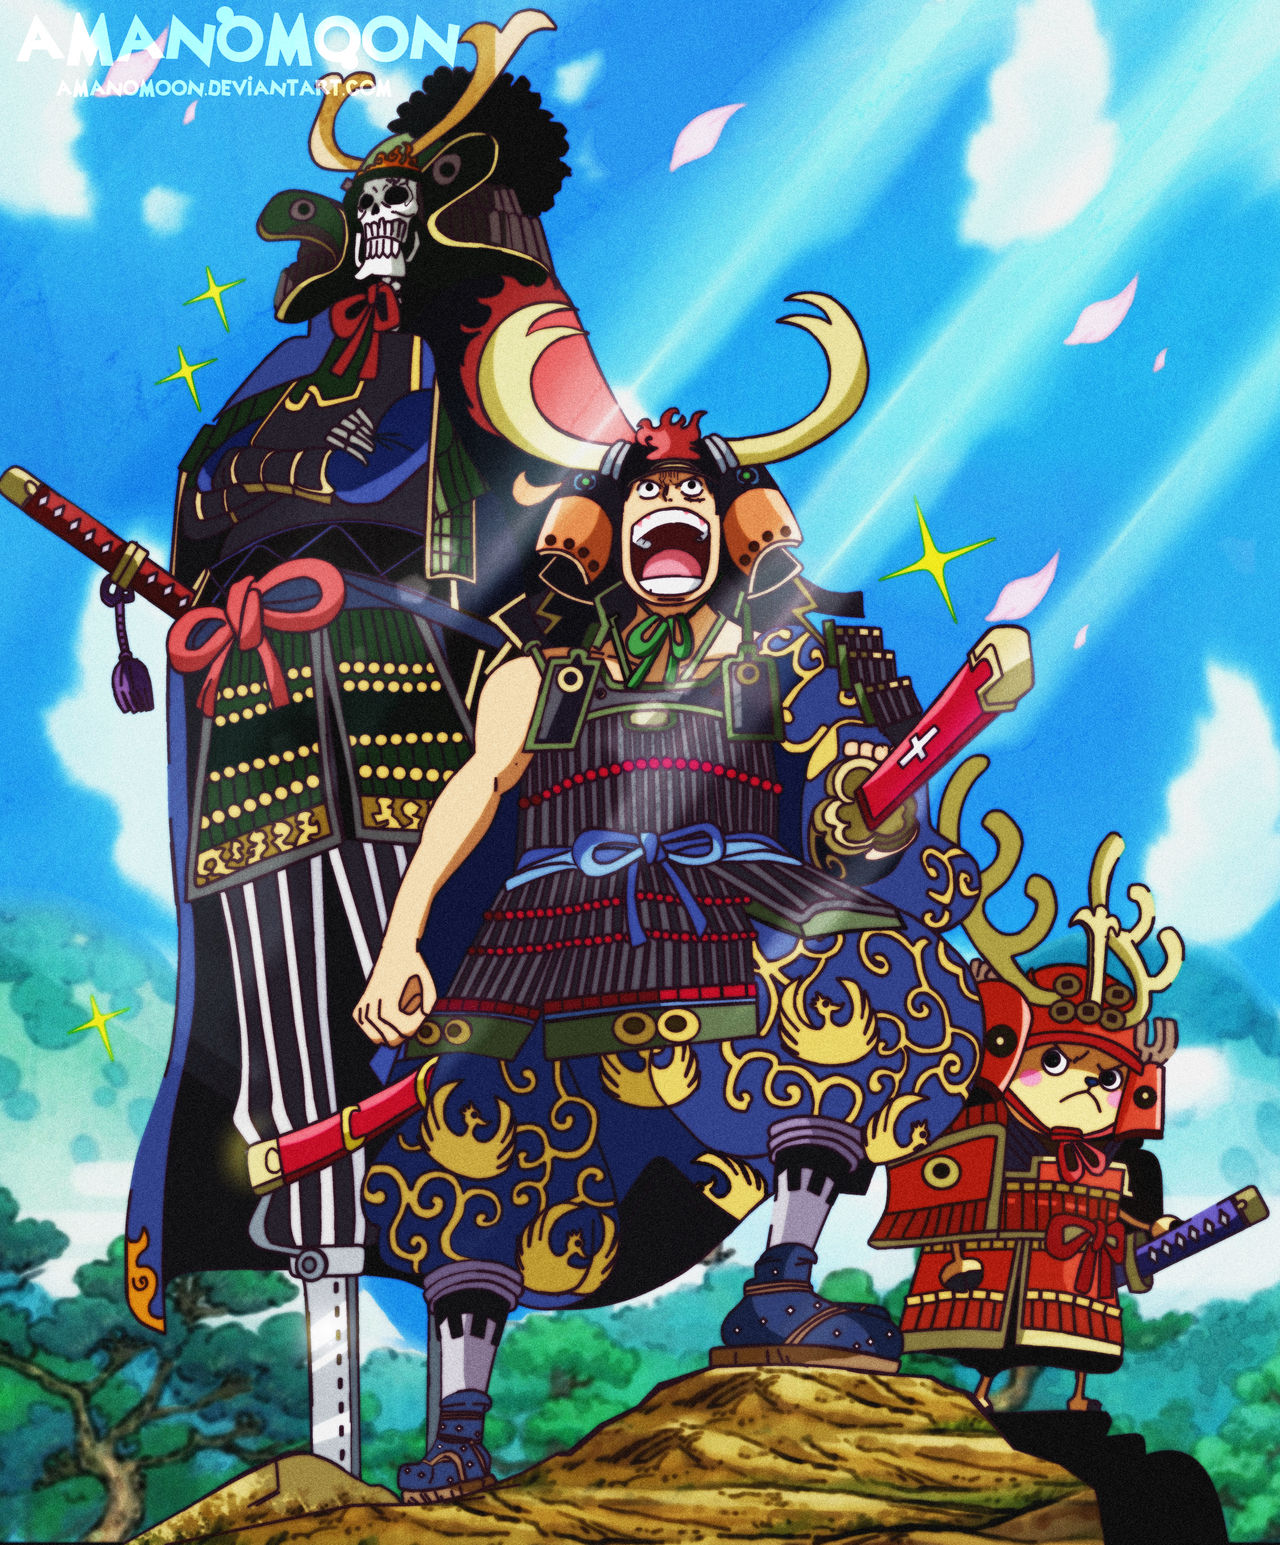 One Piece Chapter 959 Luffy Samurai Armor Anime By Amanomoon On Deviantart